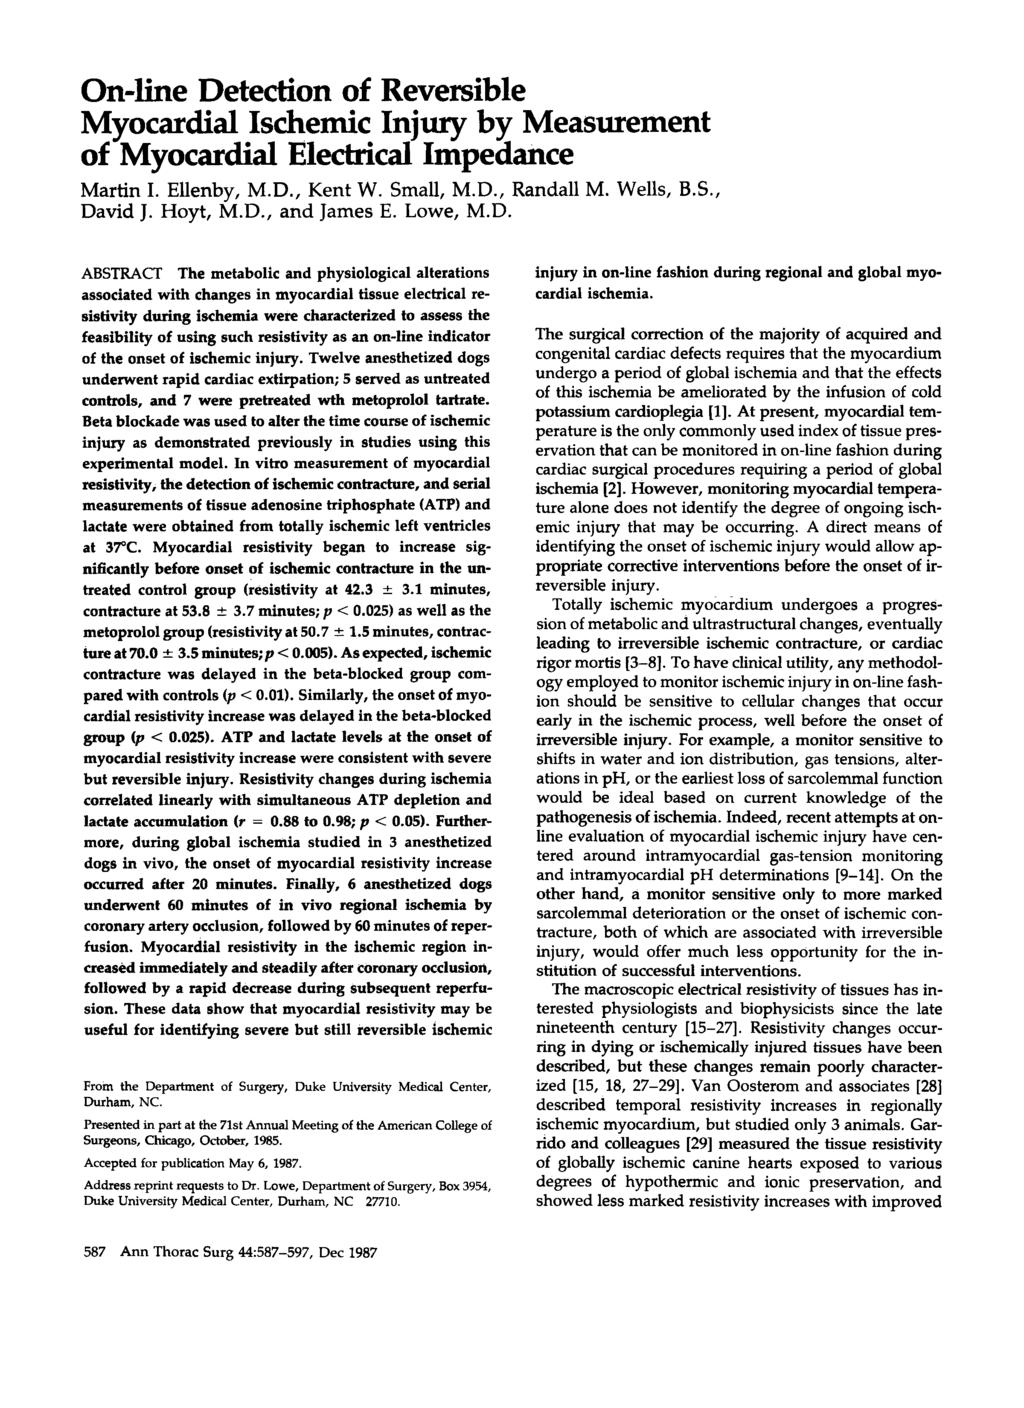 Online Detetion of Reversible Myoardial shemi njury by Measurement of Myoardial Eletrial mpedane Martin. Ellenby, M.D., Kent W. Small, M.D., Randall M. Wells, B.S., David J. Hoyt, M.D., and James E.